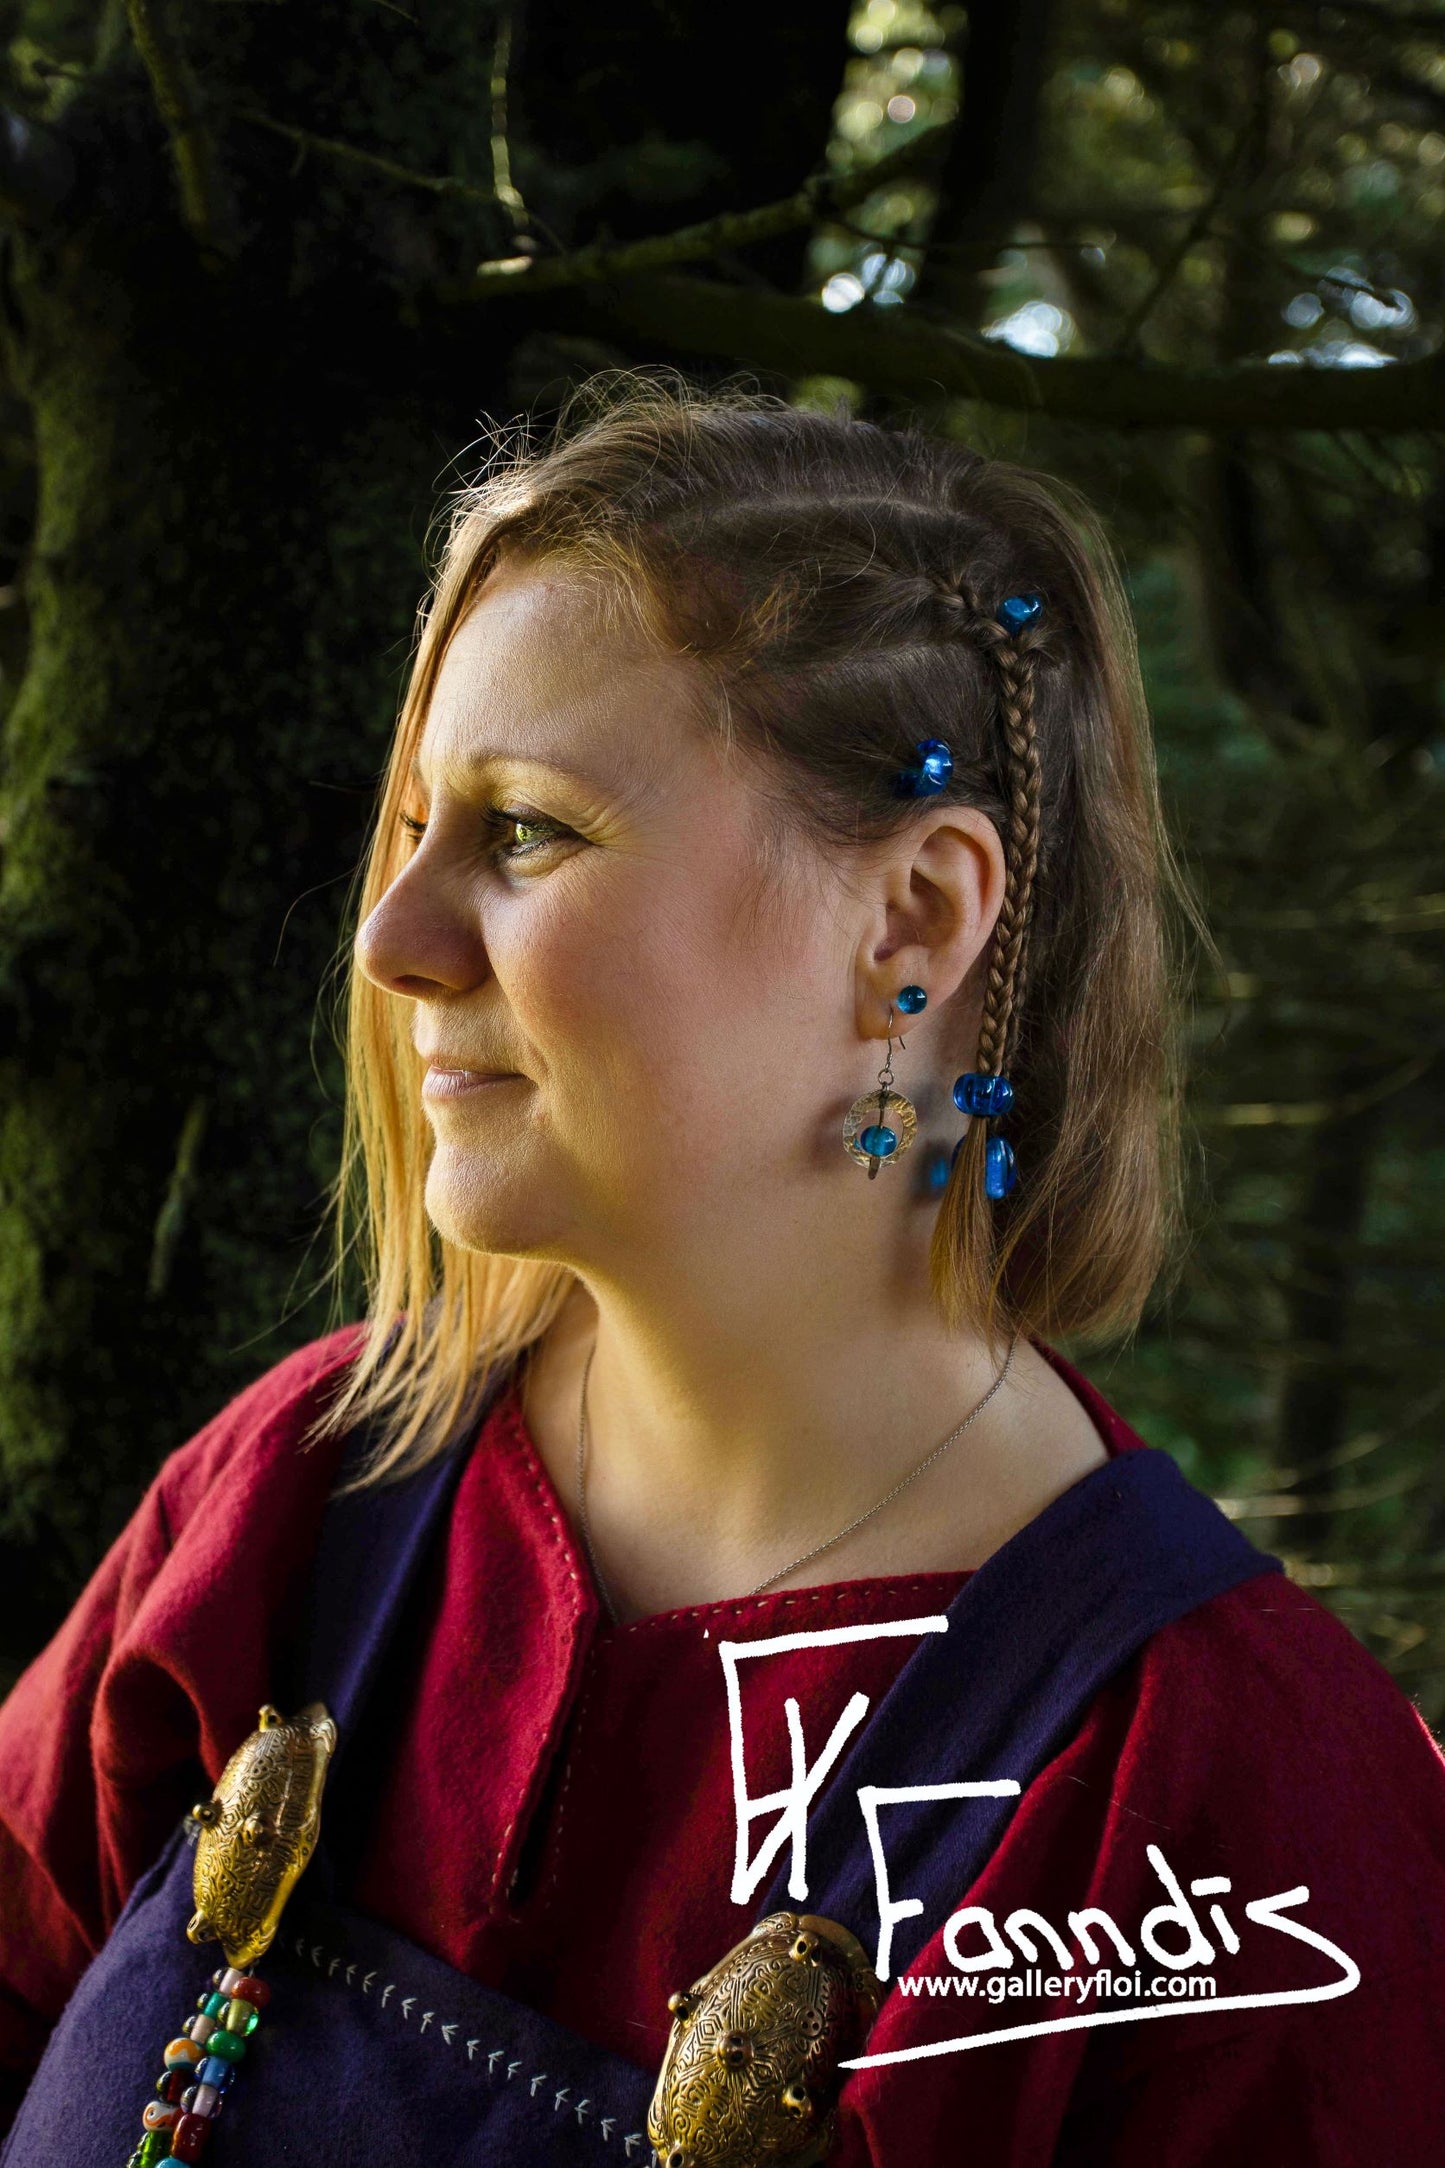 Víkinga glerperlu hárskraut rautt / Viking glass bead hair accessories Read